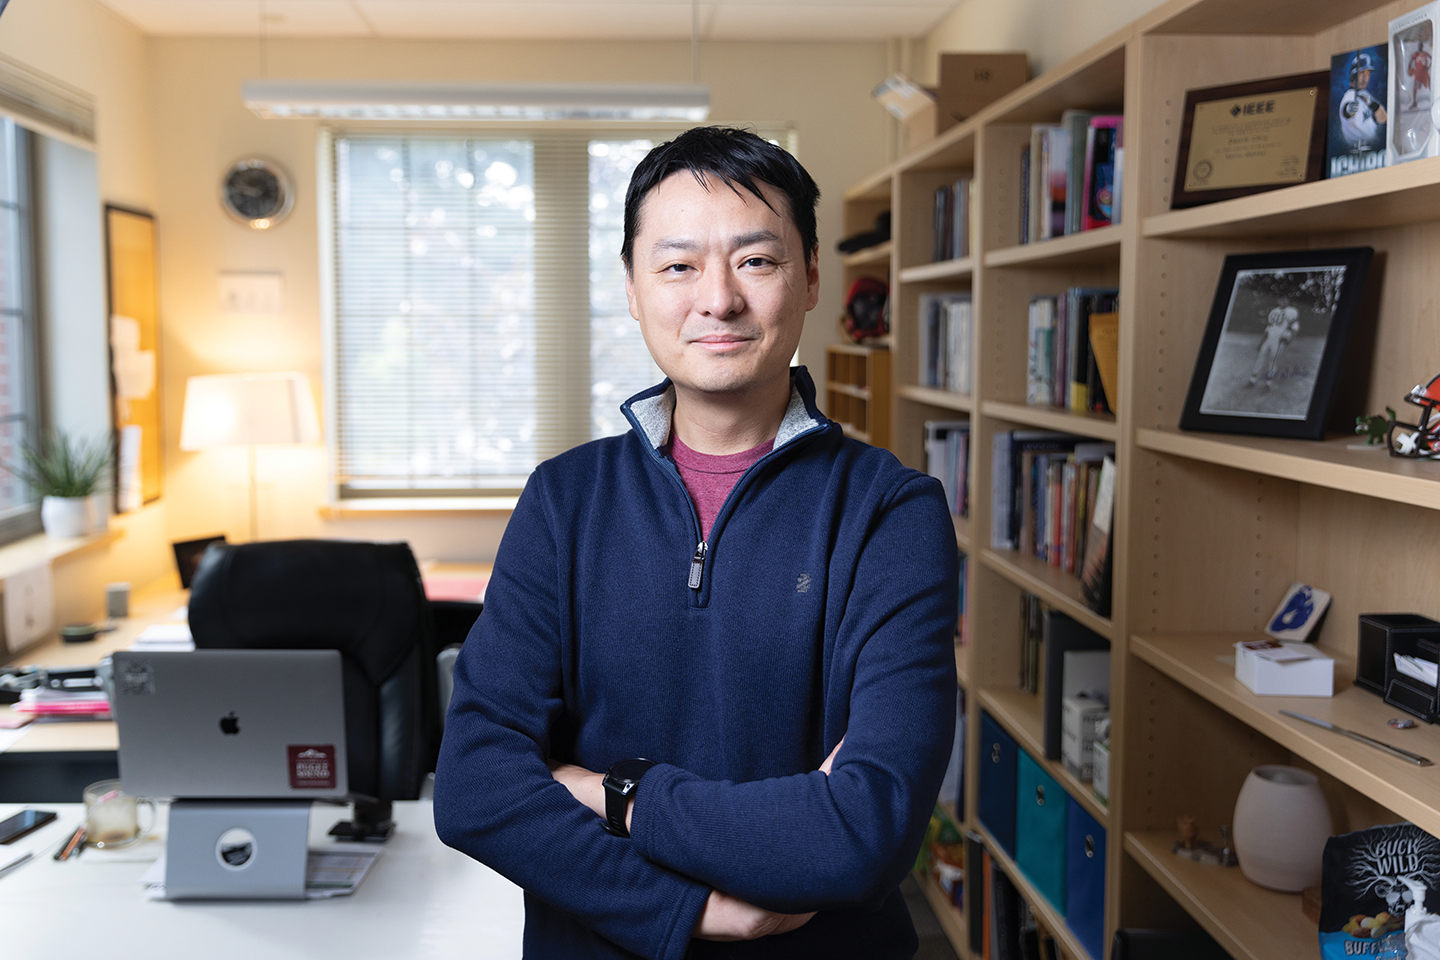 Professor of Computer Science David Chiu